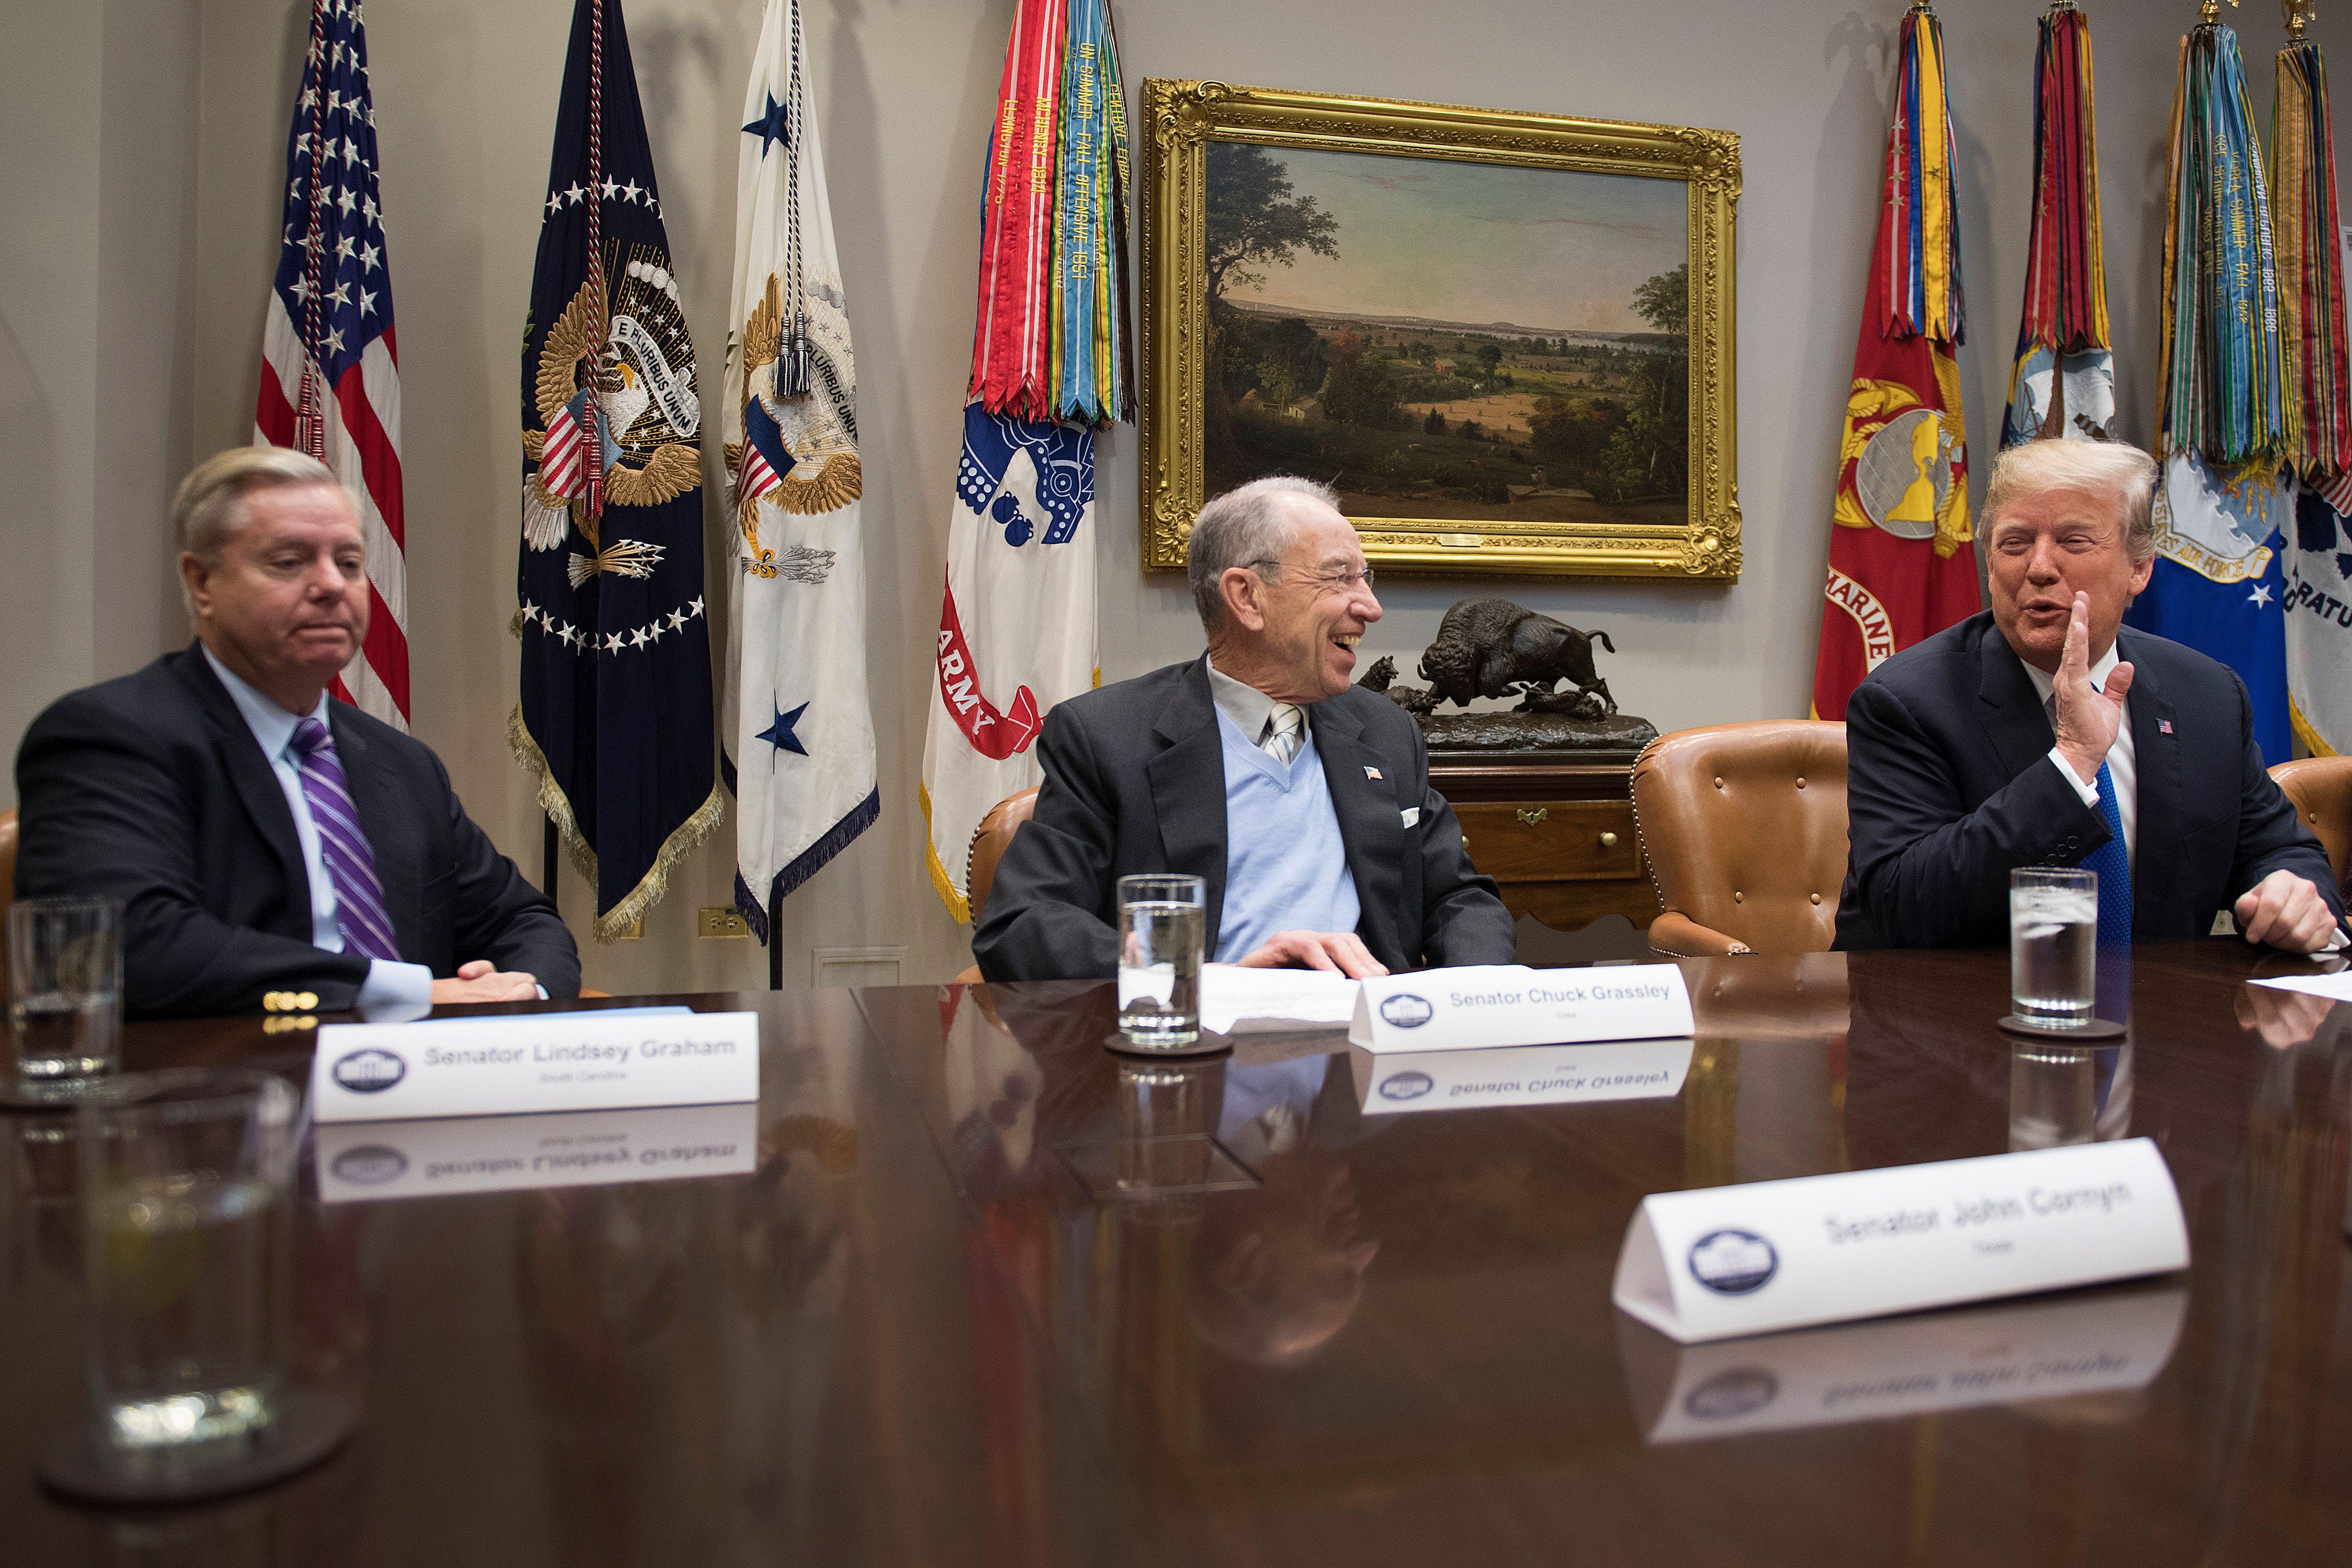 Sen. Chuck Grassley, Sen. Lindsey Graham, and Donald Trump at a meeting at the White House.